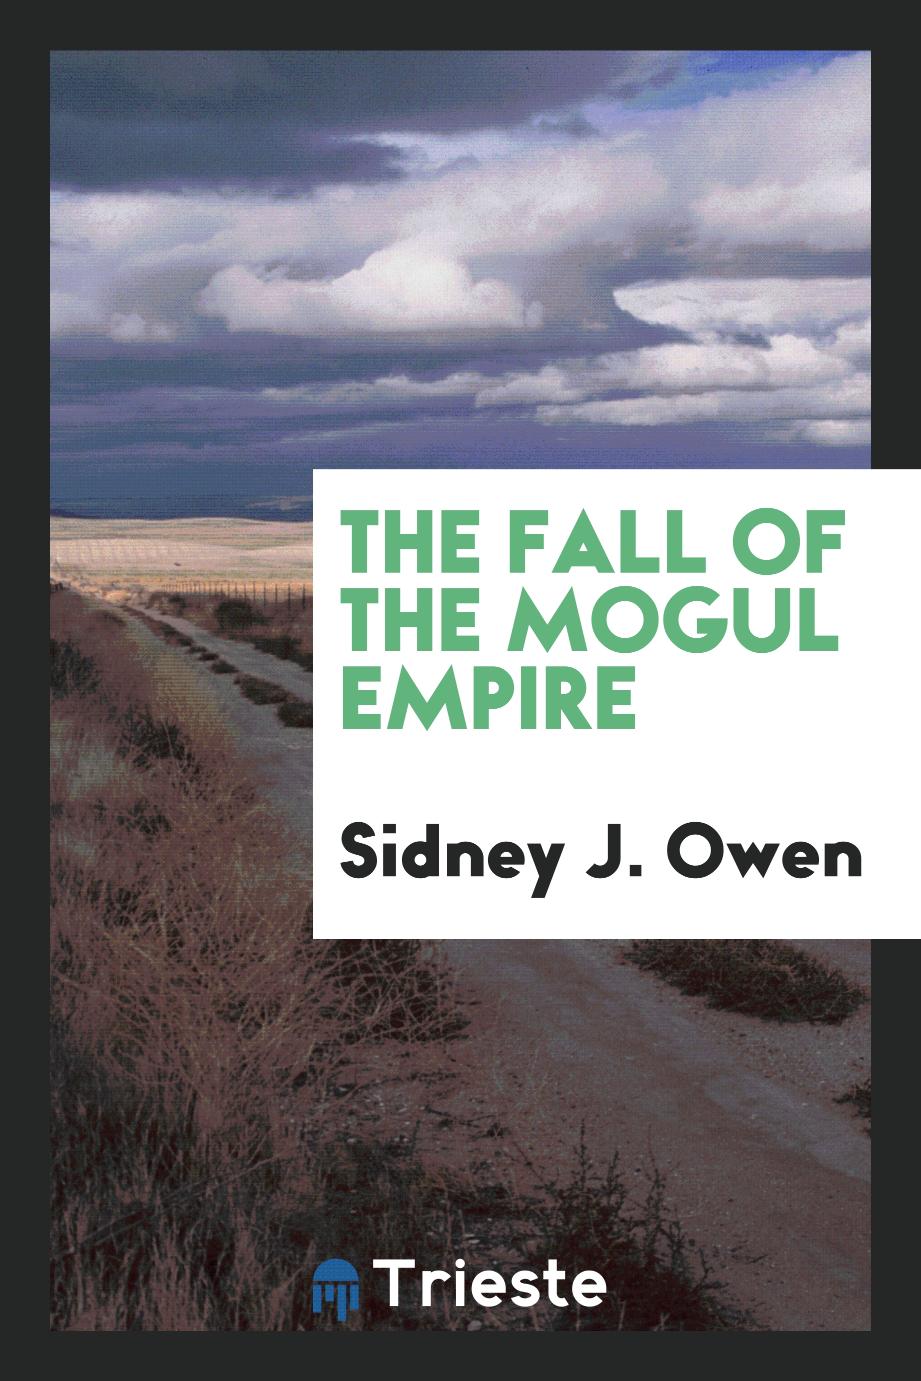 The fall of the Mogul Empire